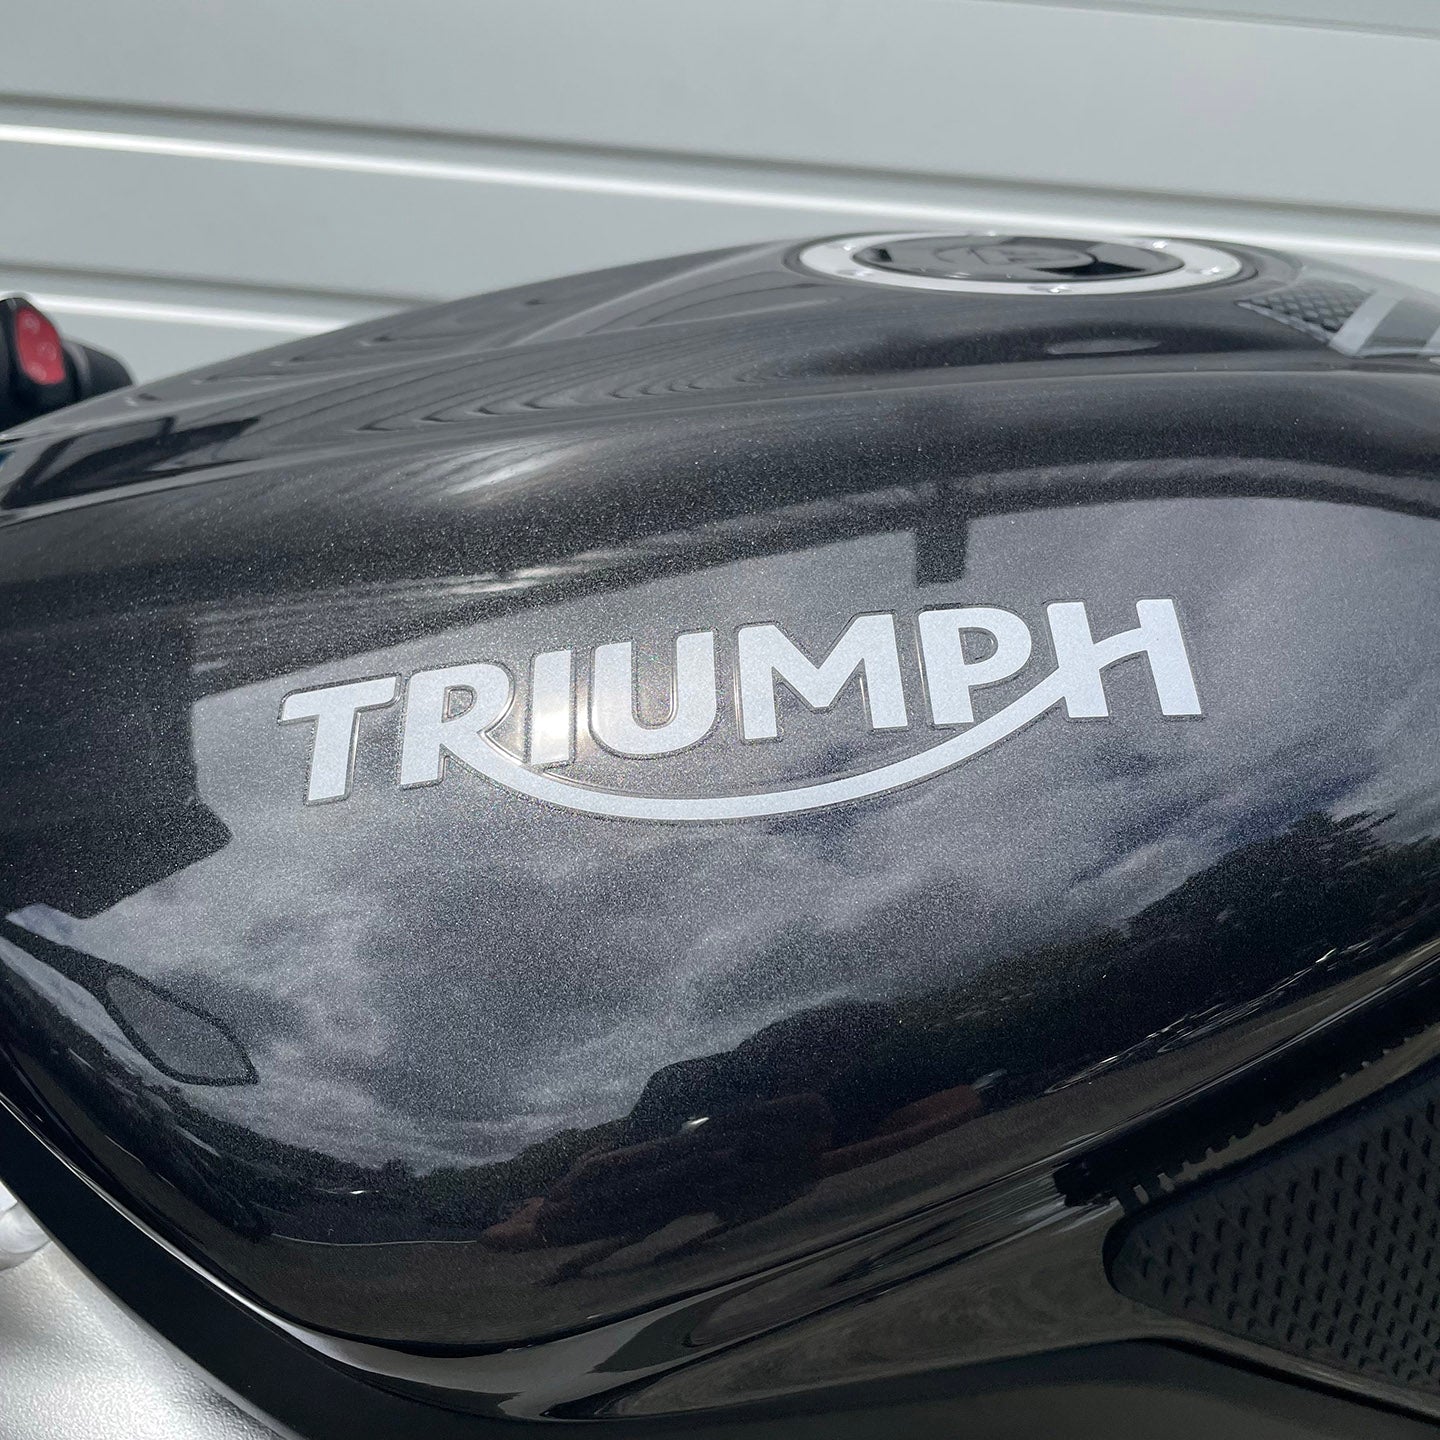 2020 Triumph Daytona 765 Moto 2 Limited Edition #433/765 (1,605 Miles)